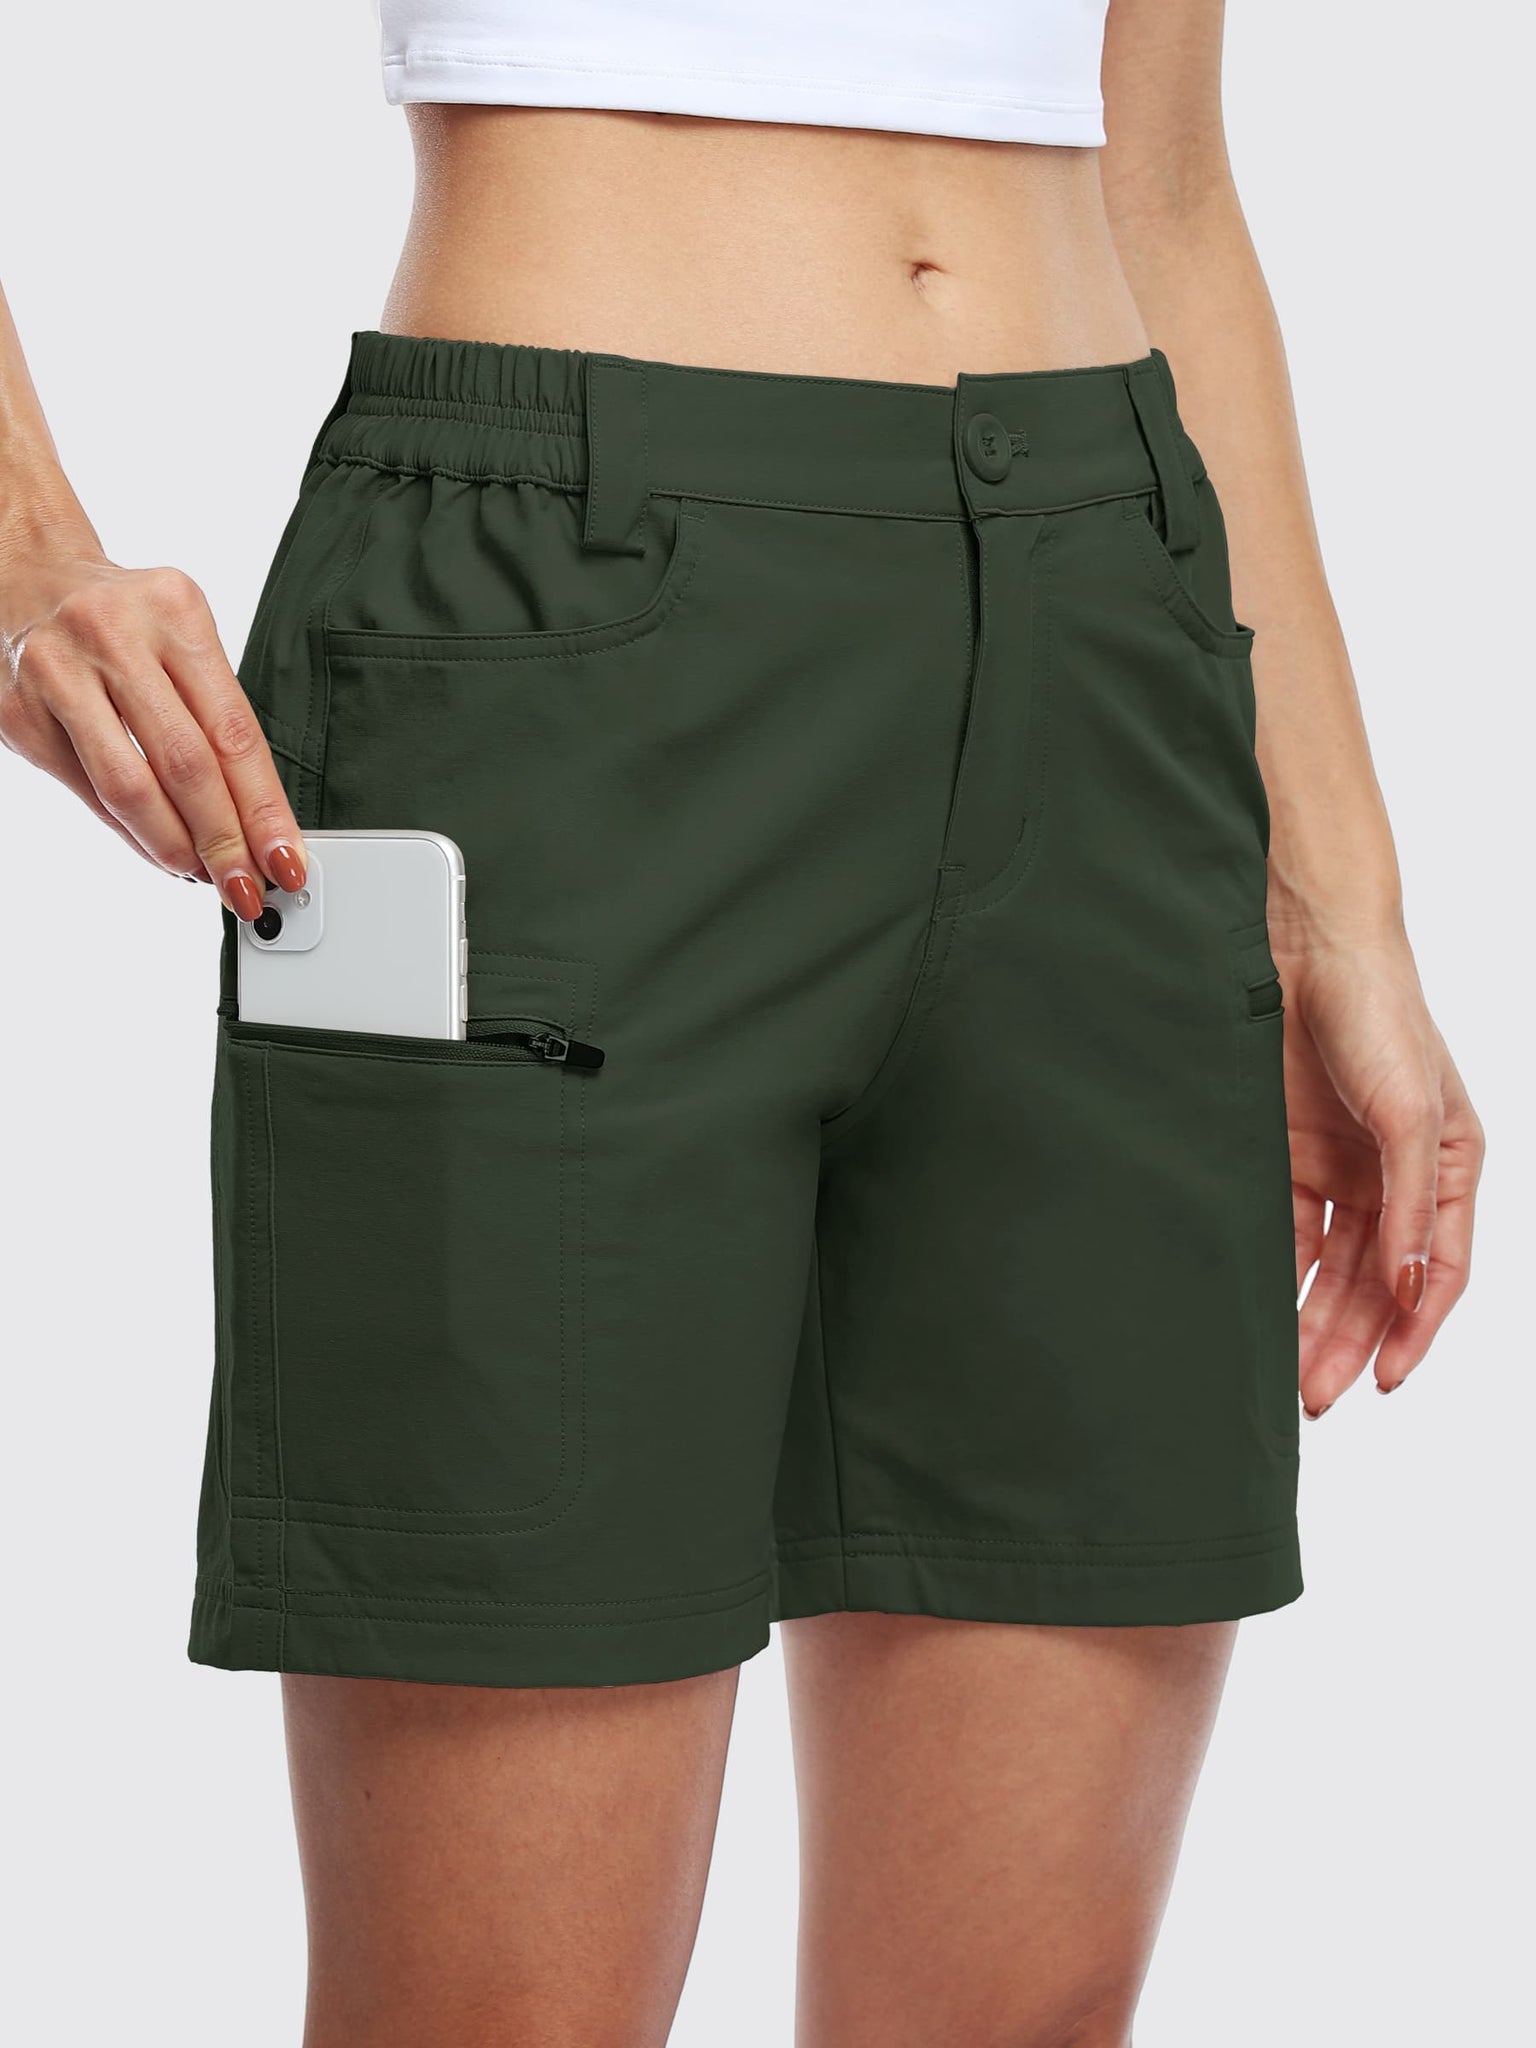 Willit Women's Outdoor Cargo Shorts 6 Inseam_ArmyGreen_model4